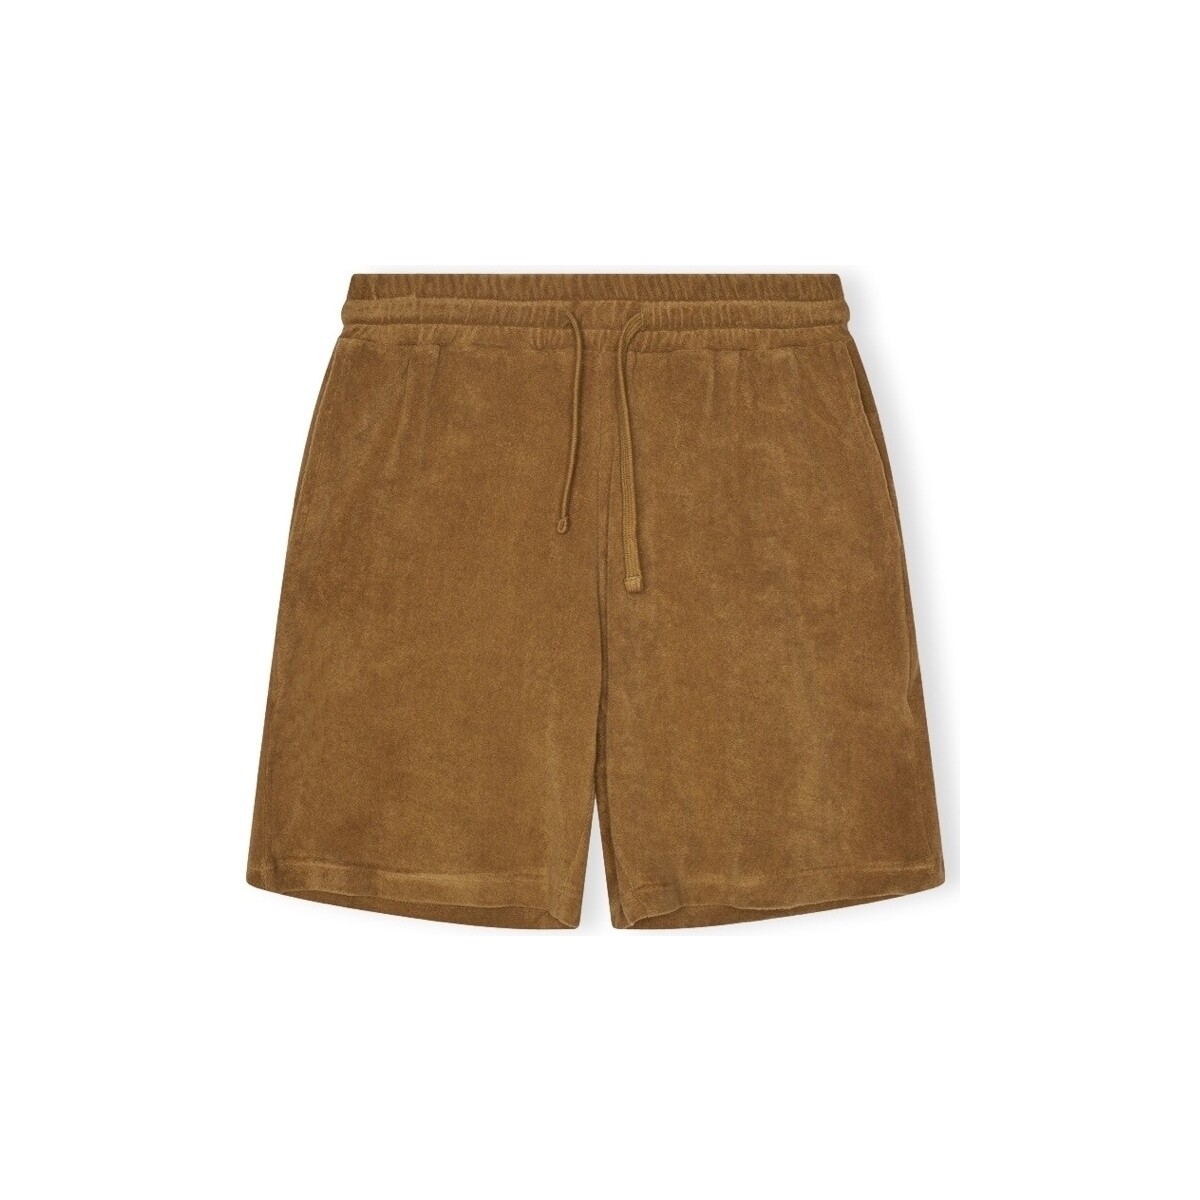 Textiel Heren Korte broeken / Bermuda's Revolution Terry Shorts 4039 - Dark Khaki Brown